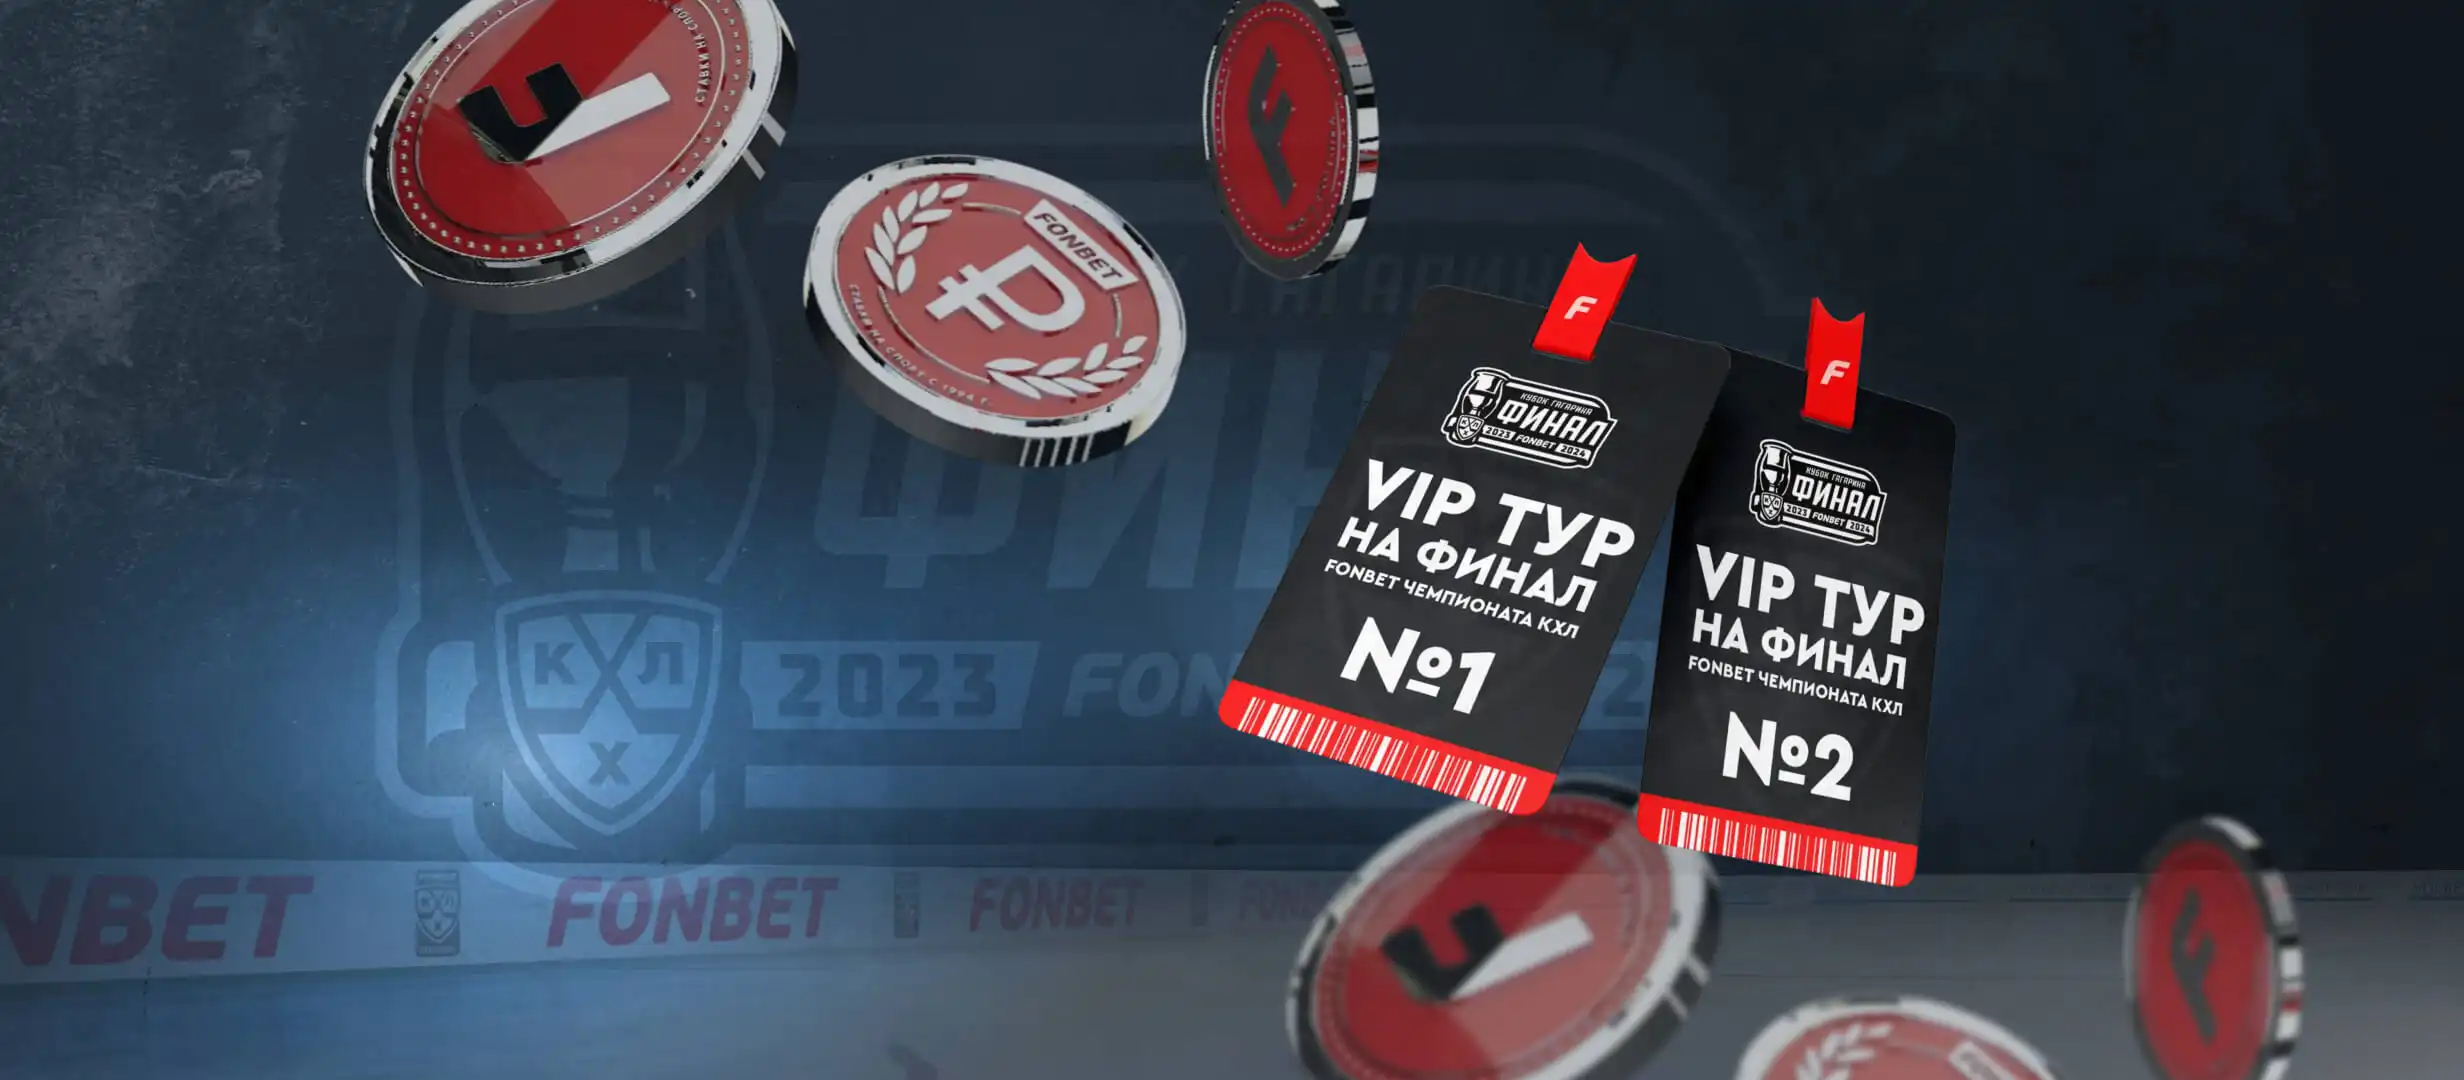 БК Фонбет предлагает призы за экспресс-ставки на КХЛ: ВИП-тур и много приятного